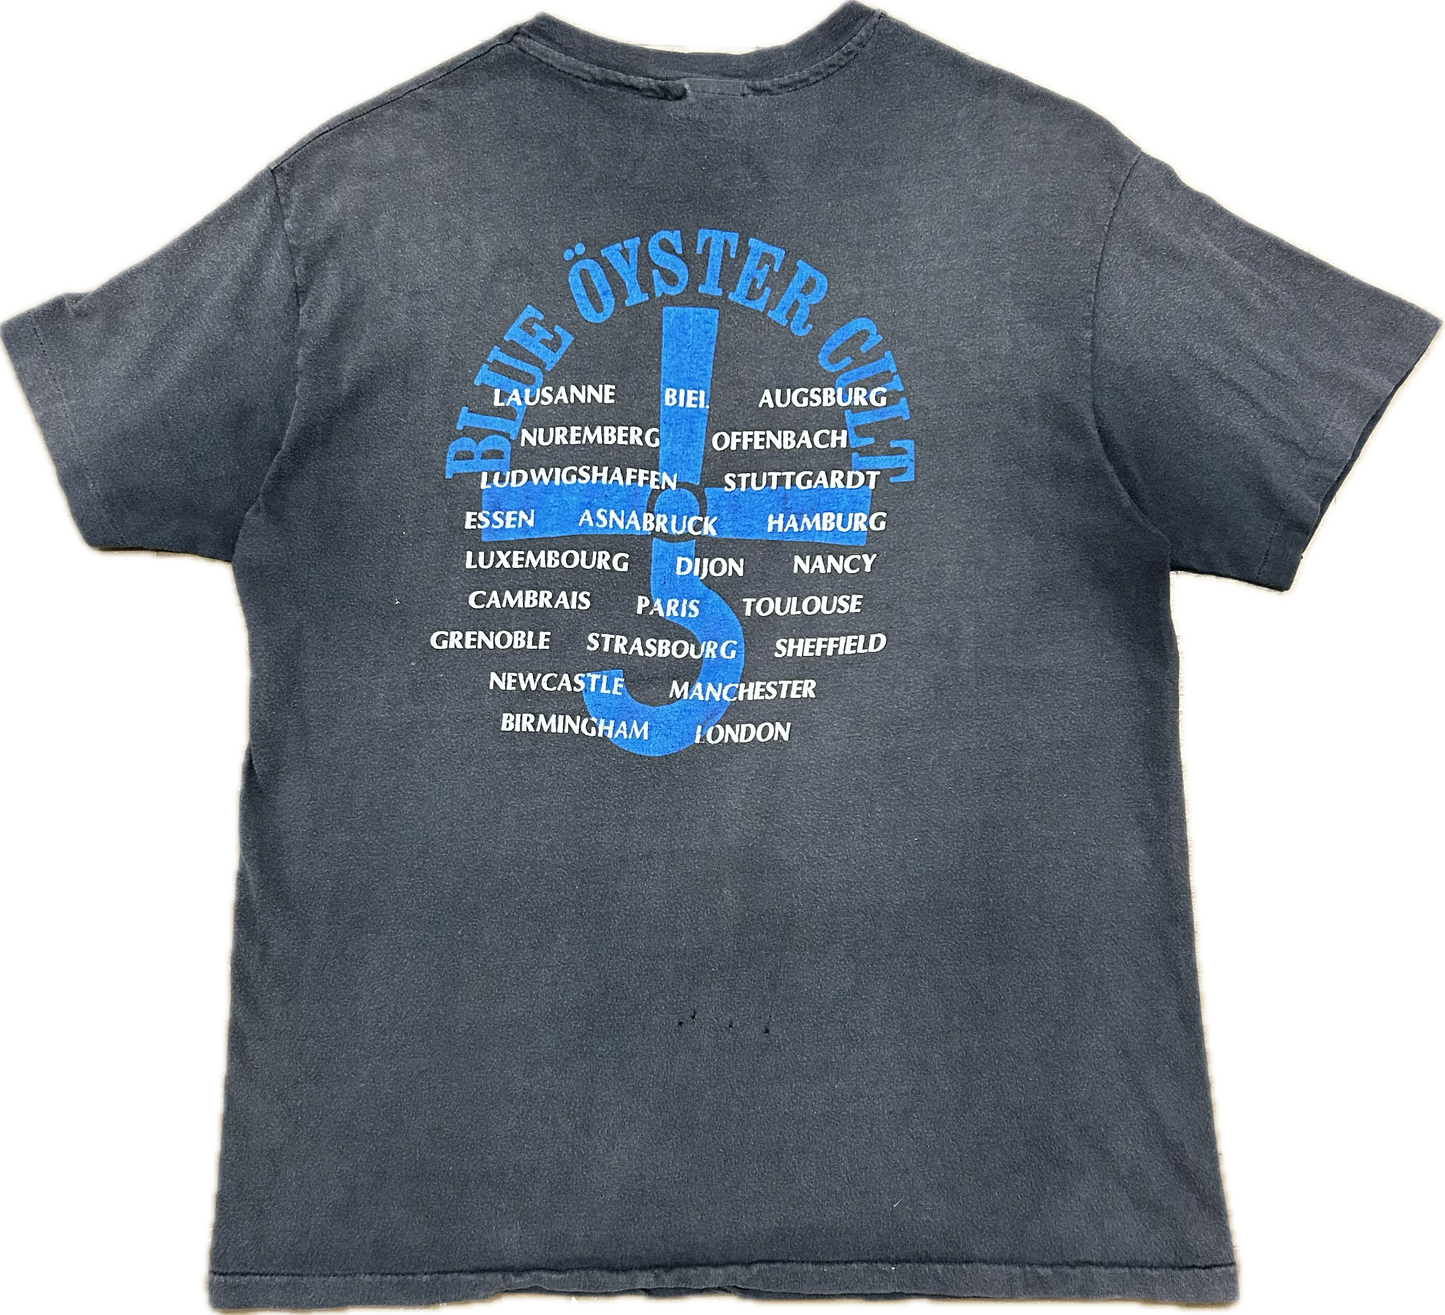 1983 Blue Öyster Cult European Tour Tshirt Sz L